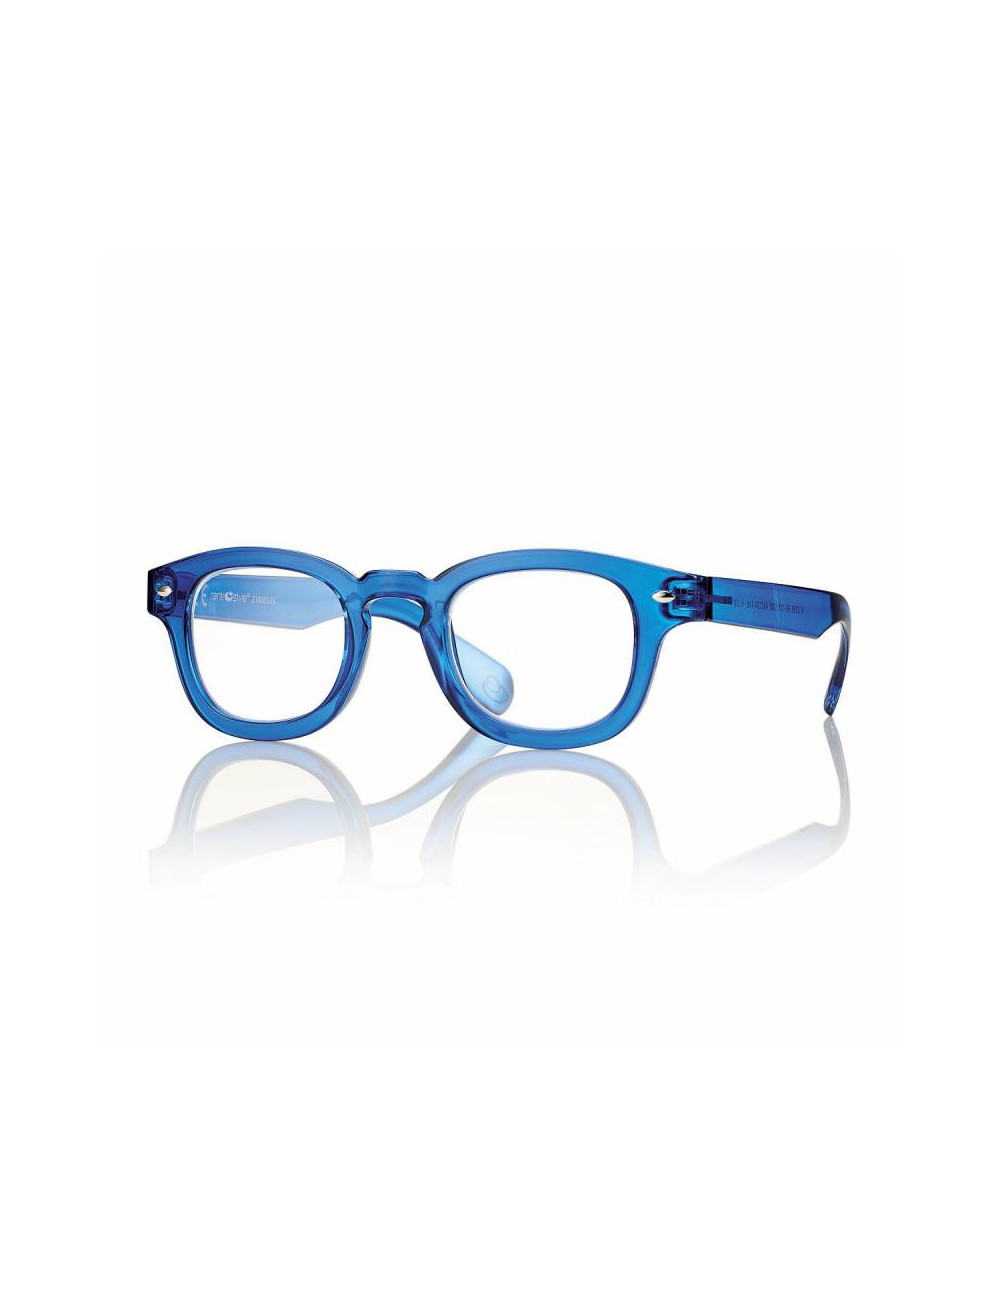 Centrostyle Smart R0358 blue reading eyeglasses